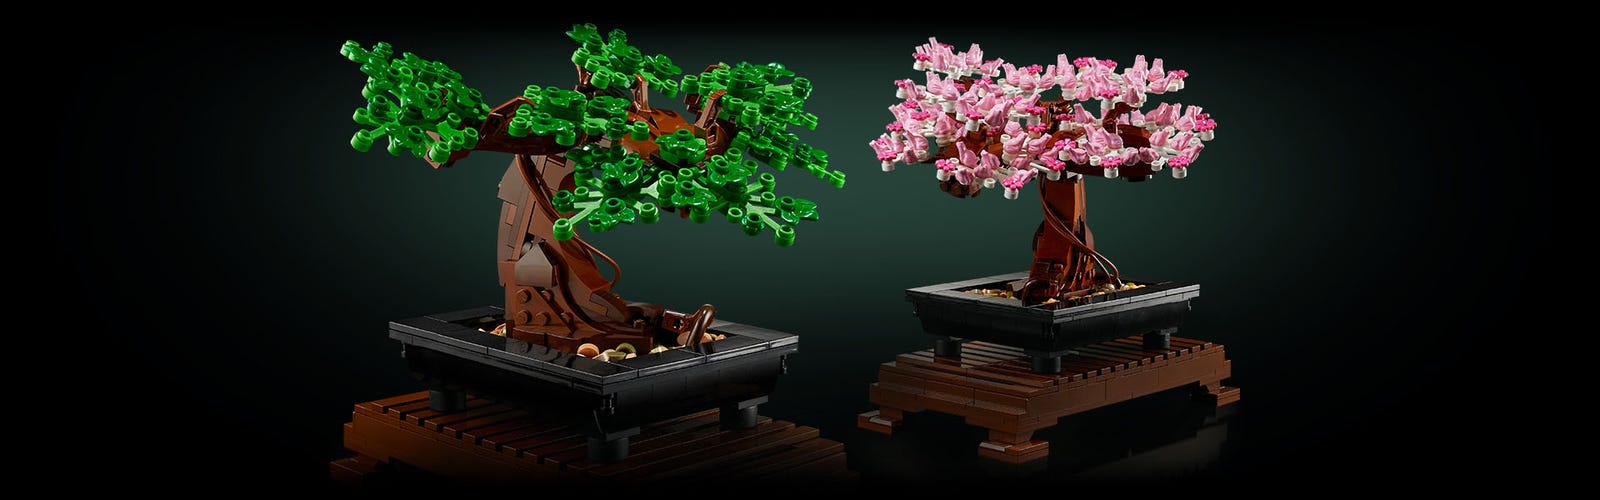 Lego bonsai